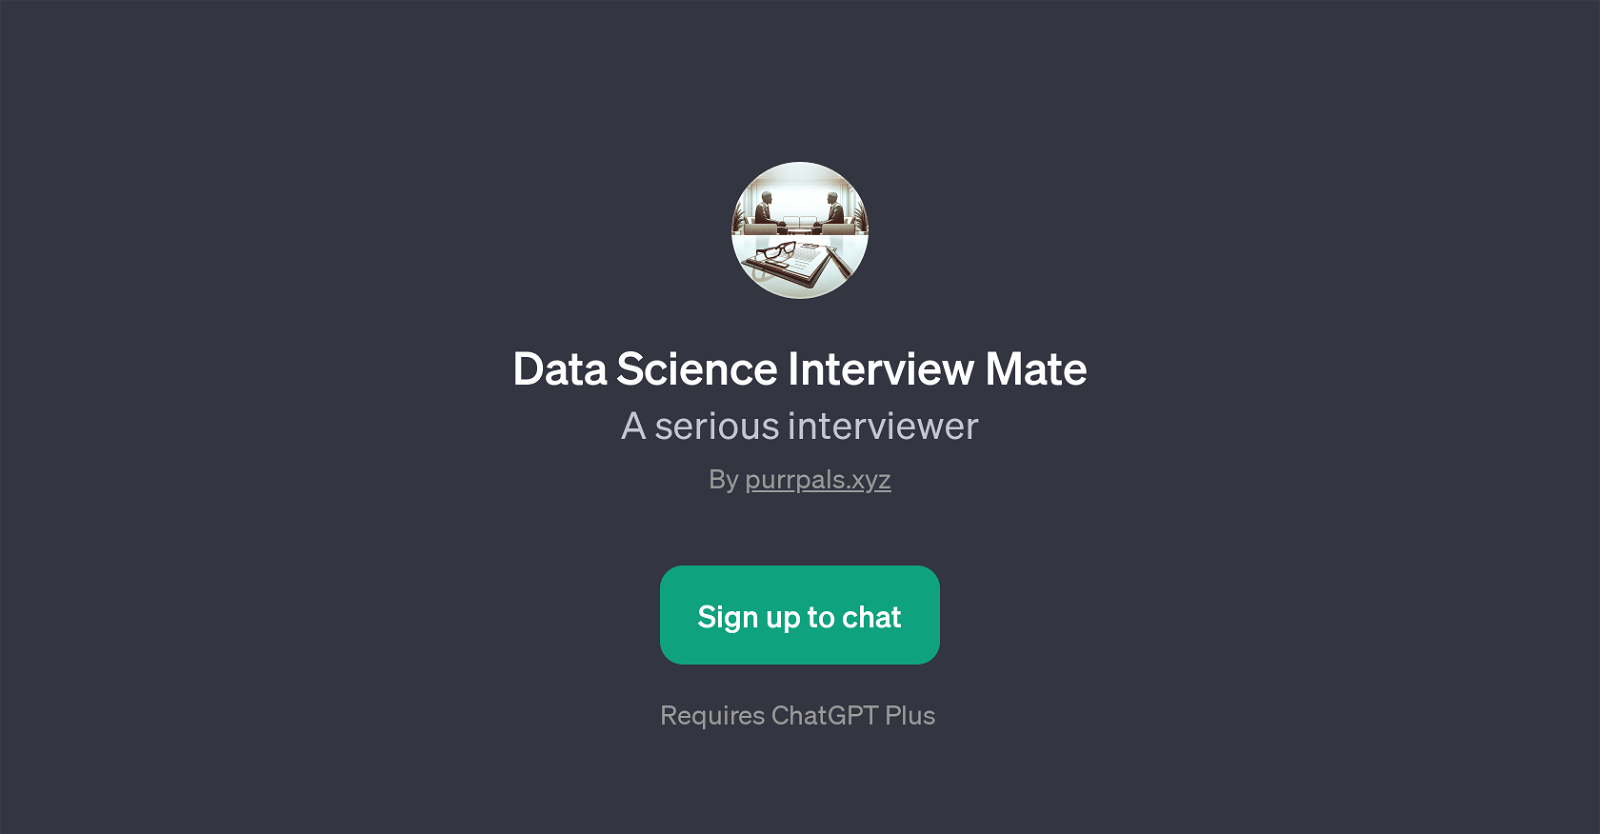 Data Science Interview Mate website